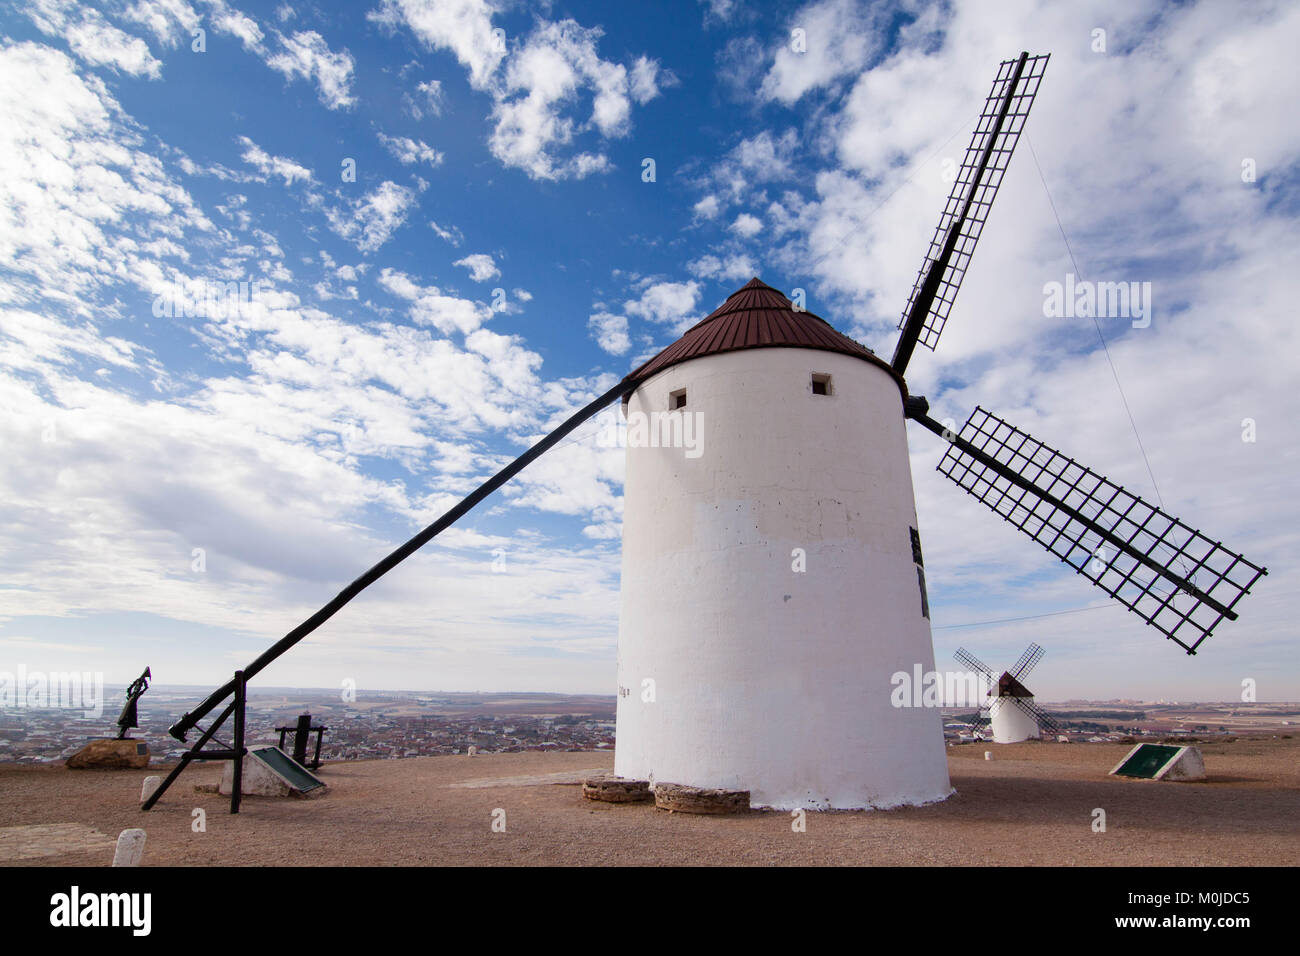 Windmills, Mota del Cuervo, Toledo province, La Mancha, Spain, Don Quixote route Stock Photo